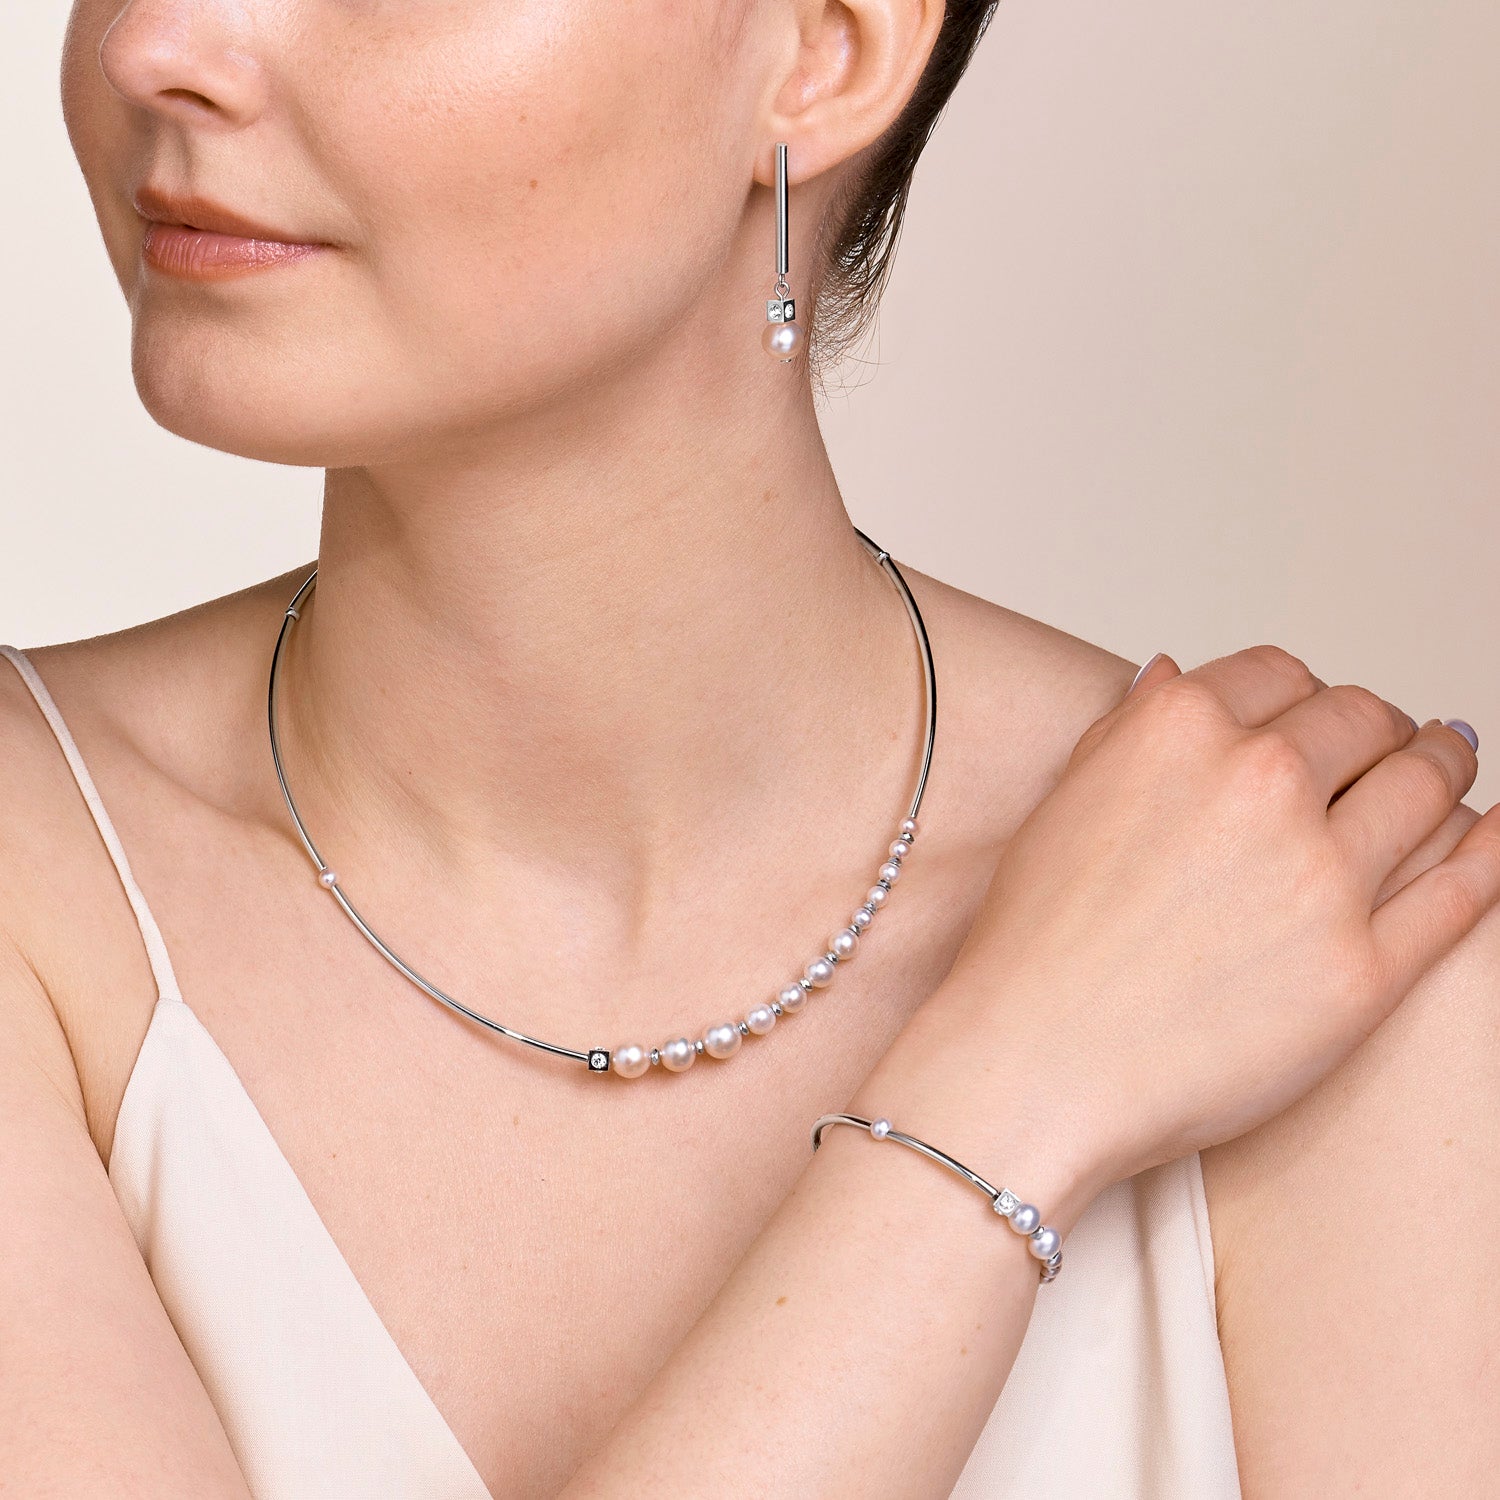 Collana Asimmetria perle d'acqua dolce e acciaio inossidabile bianco-argento